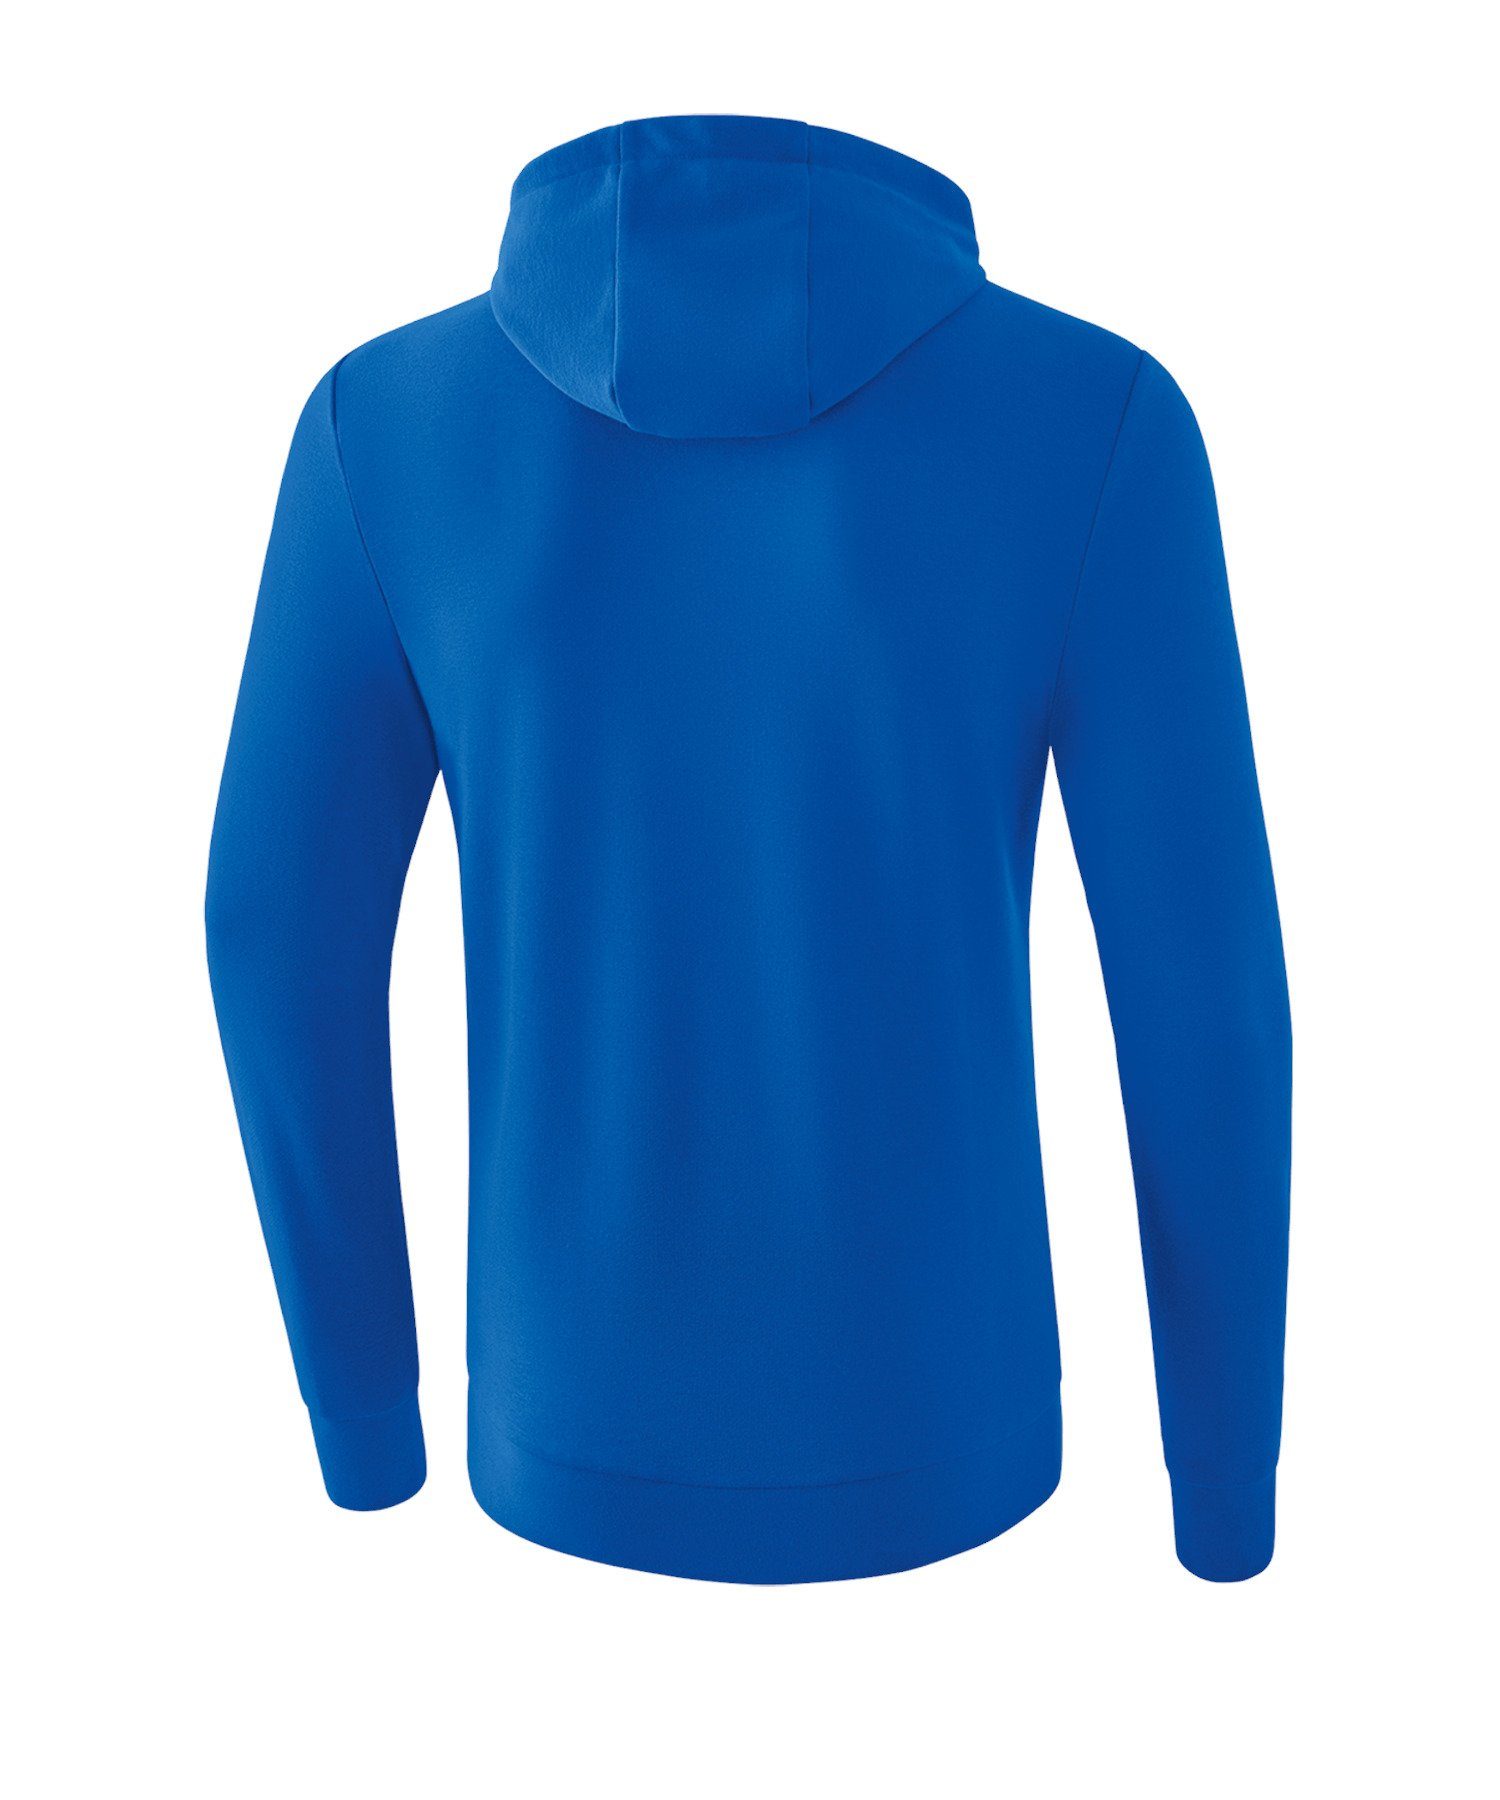 Basic Erima Hoody Sweatshirt blaublau